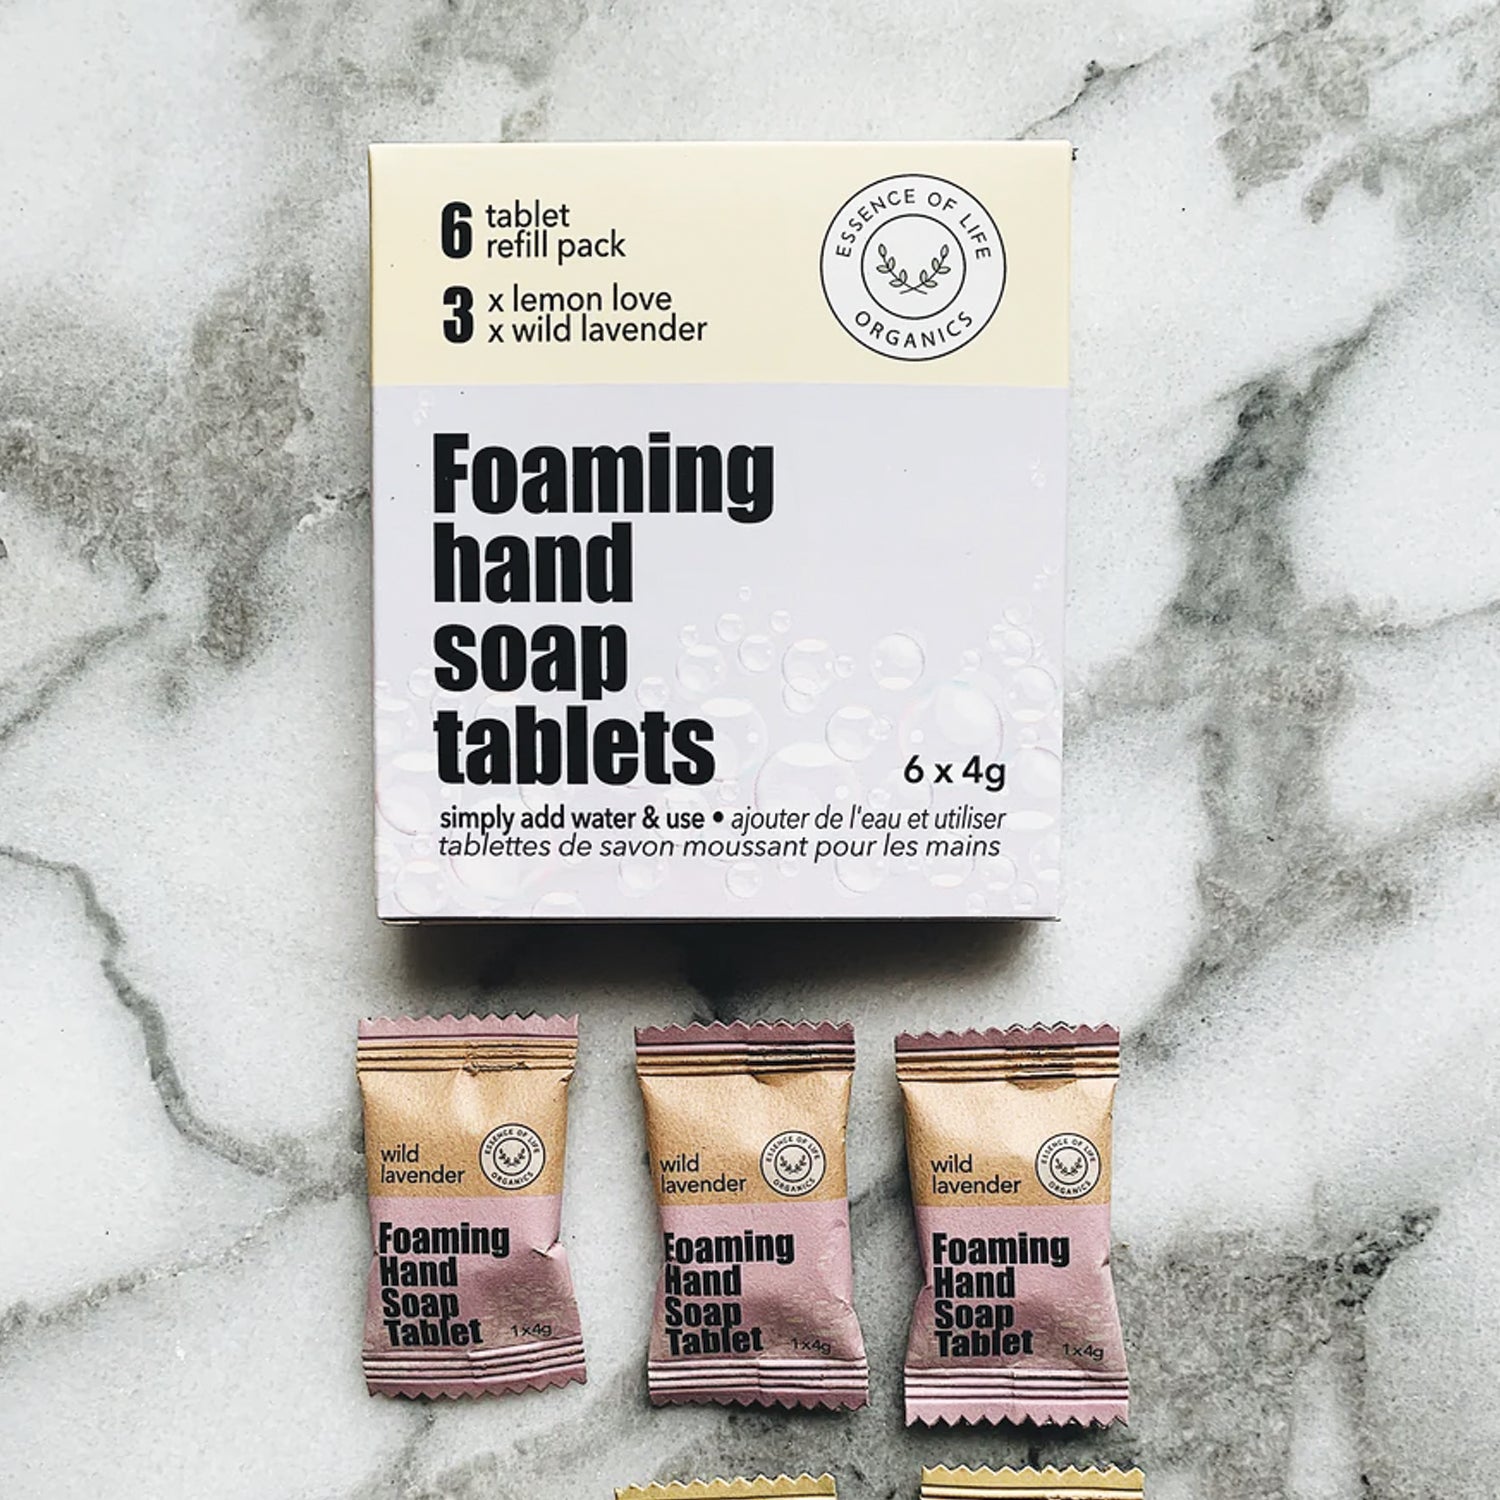 Essence of Life Organics - Foaming Hand Soap Tablets